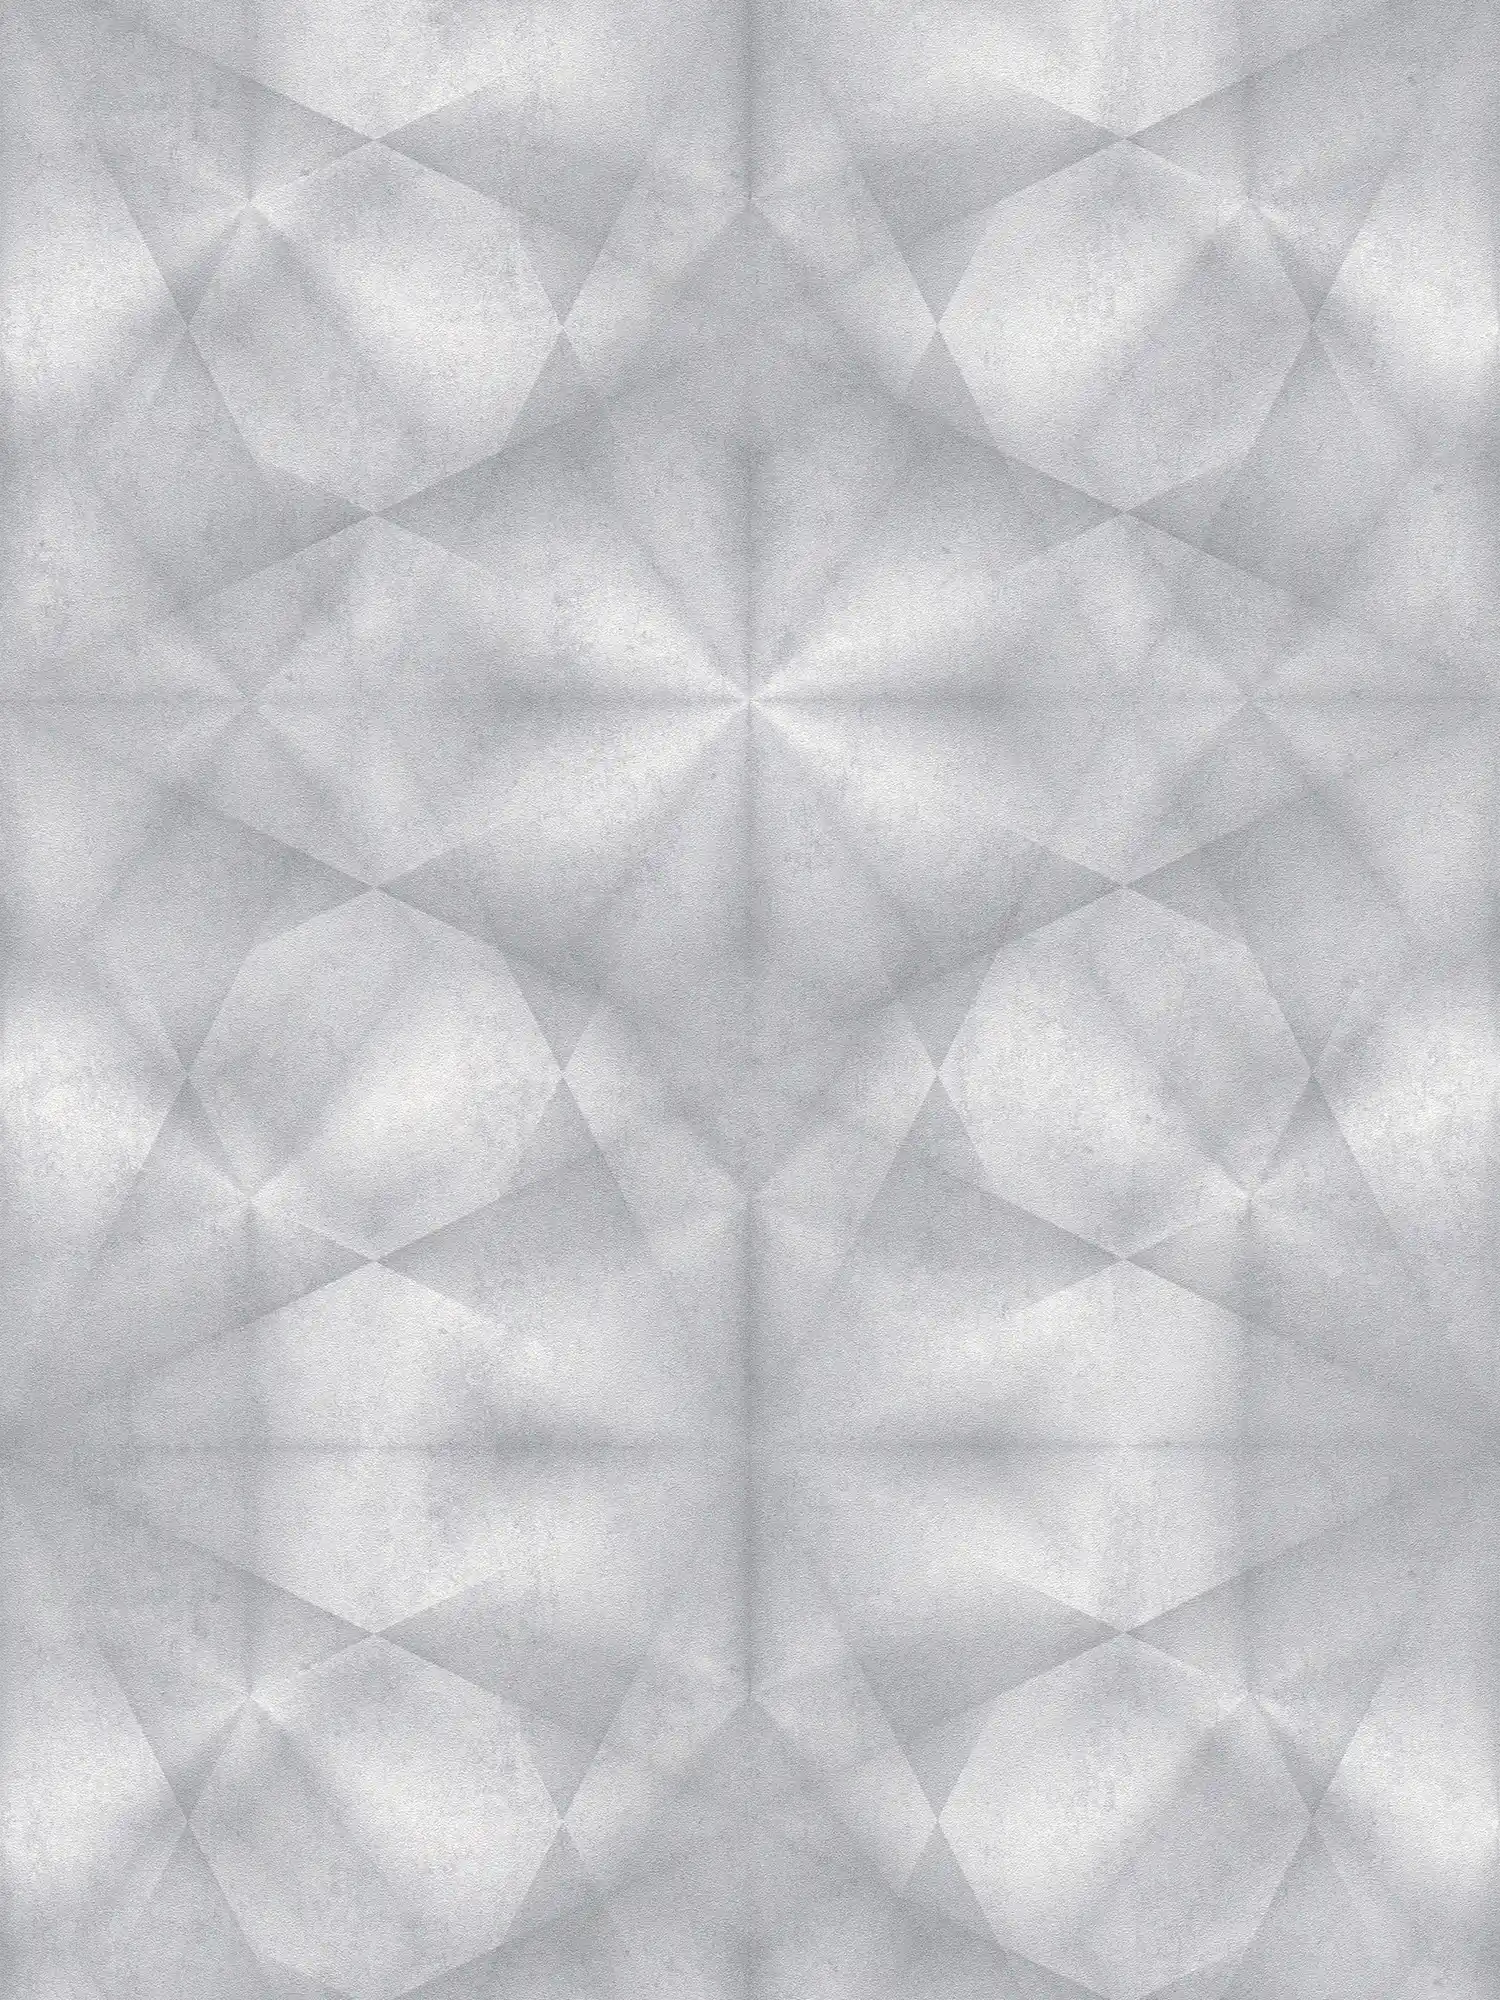 Grey wallpaper kaleidoscope pattern with 3D effect - grey, metallic
